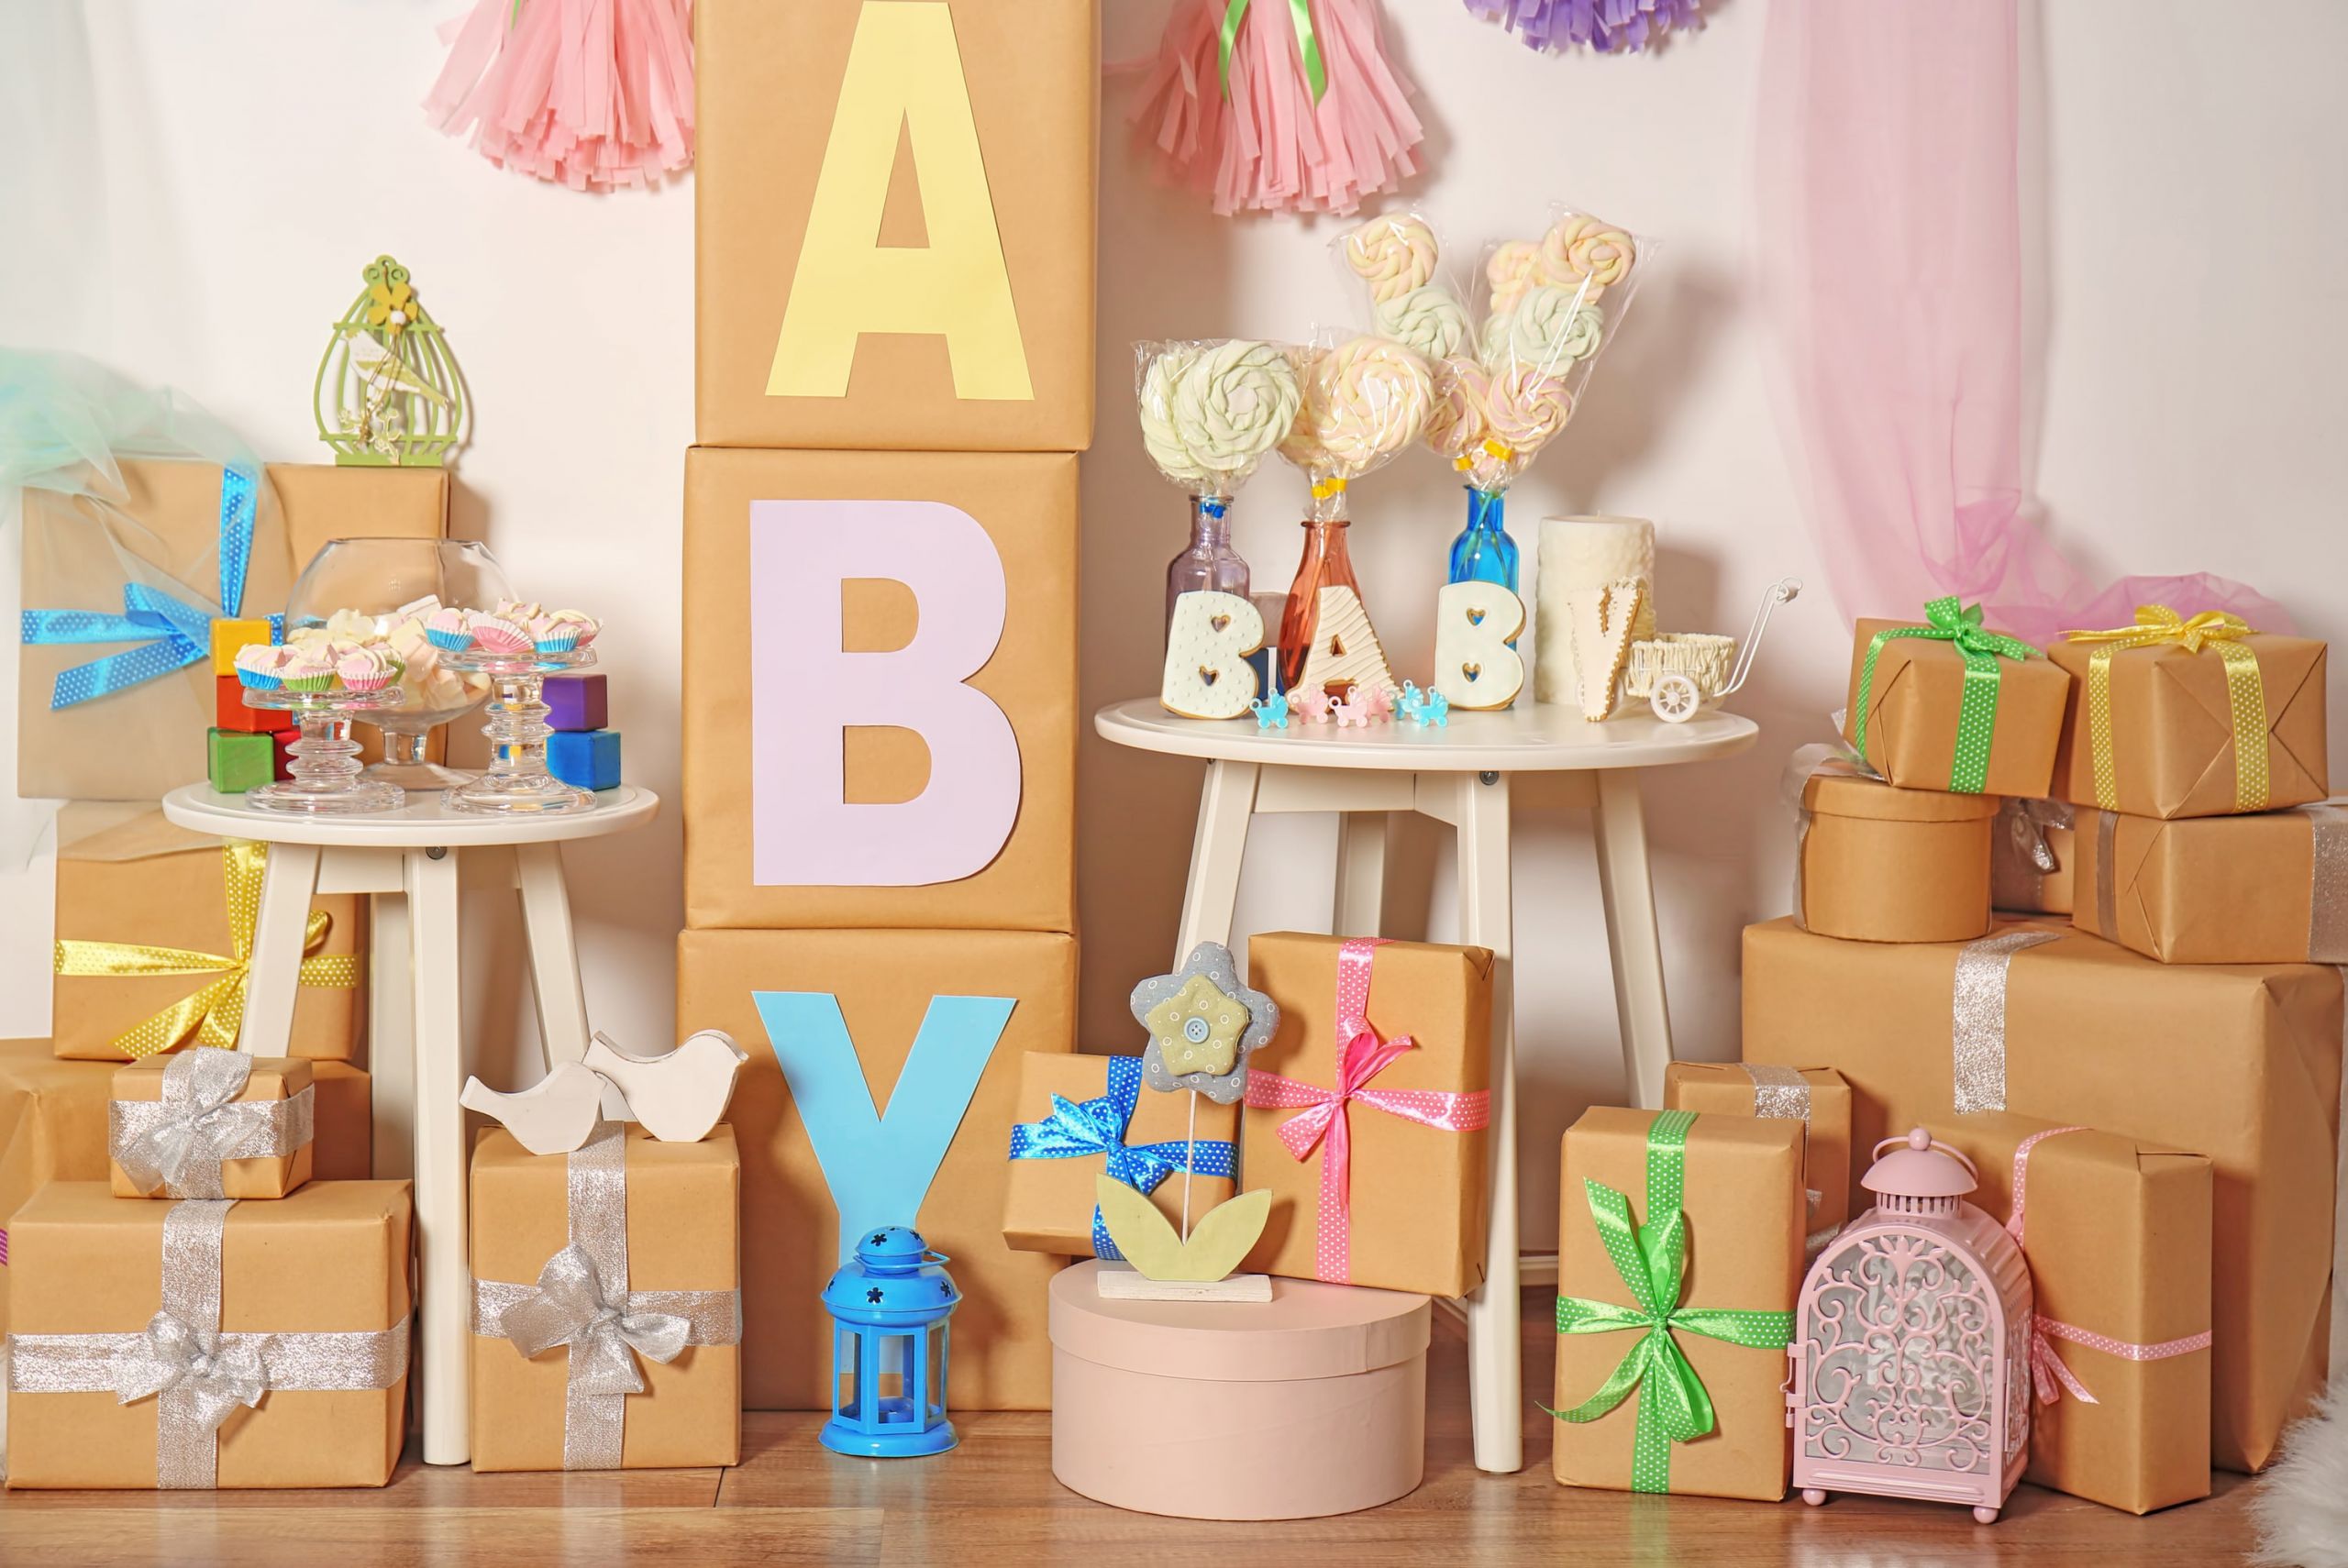 Decor Ideas For Baby Shower
 5 Cheap & Unique Baby Shower Decoration Ideas